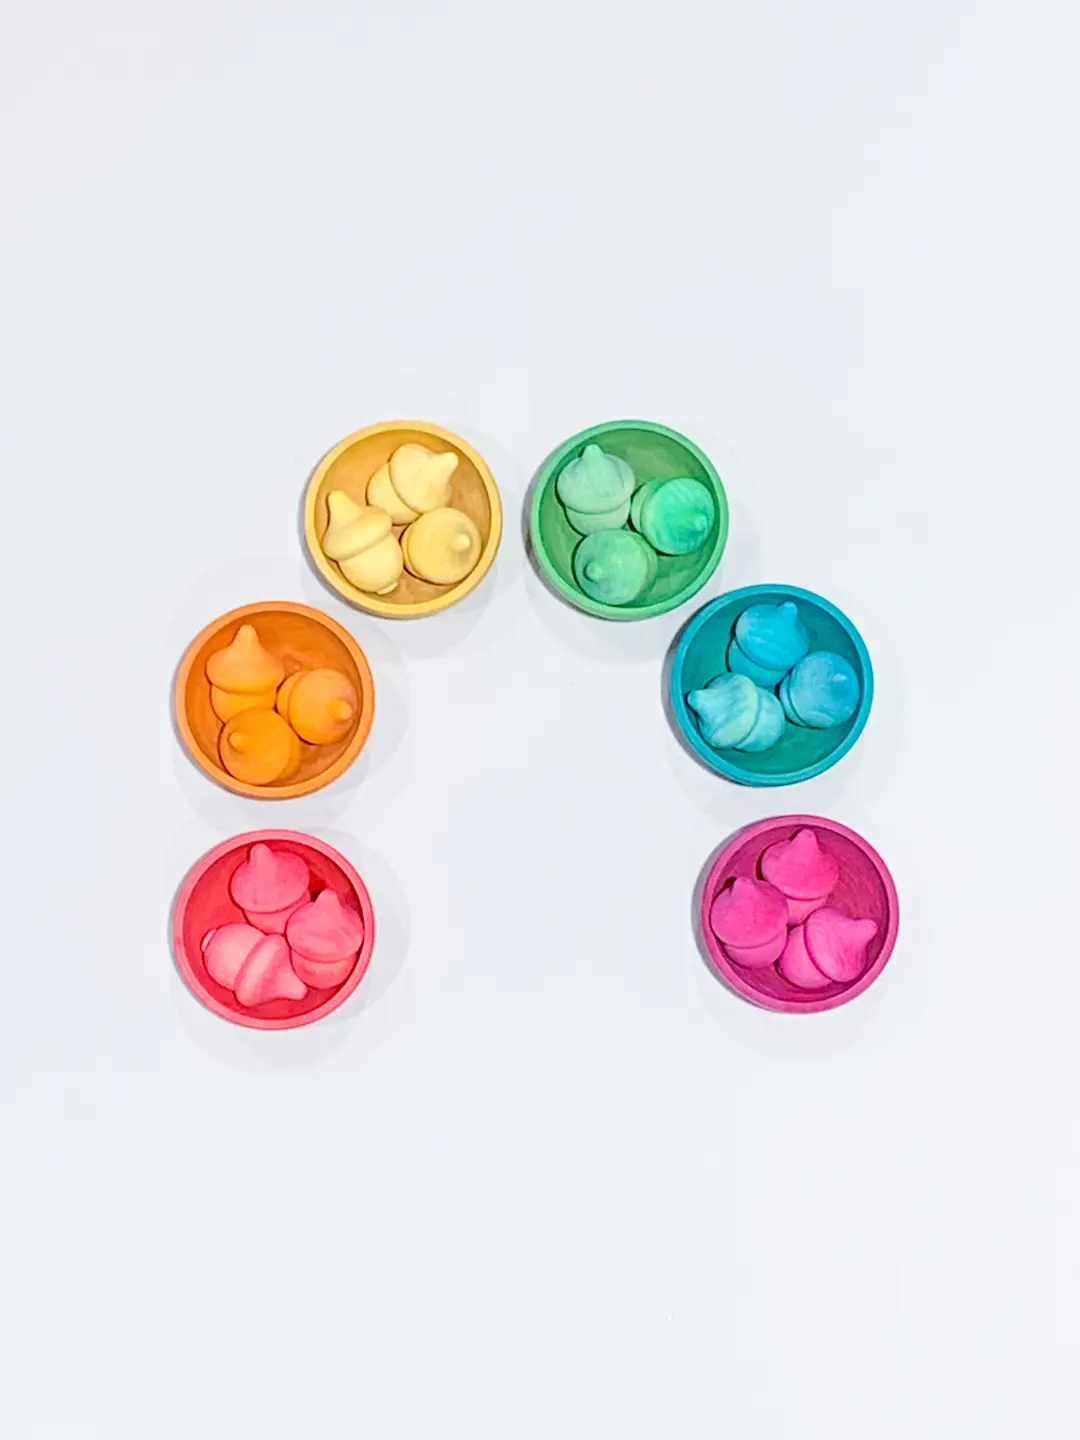 Dyed Rainbow Acorns in Bowls - DIY - Playgarden Online